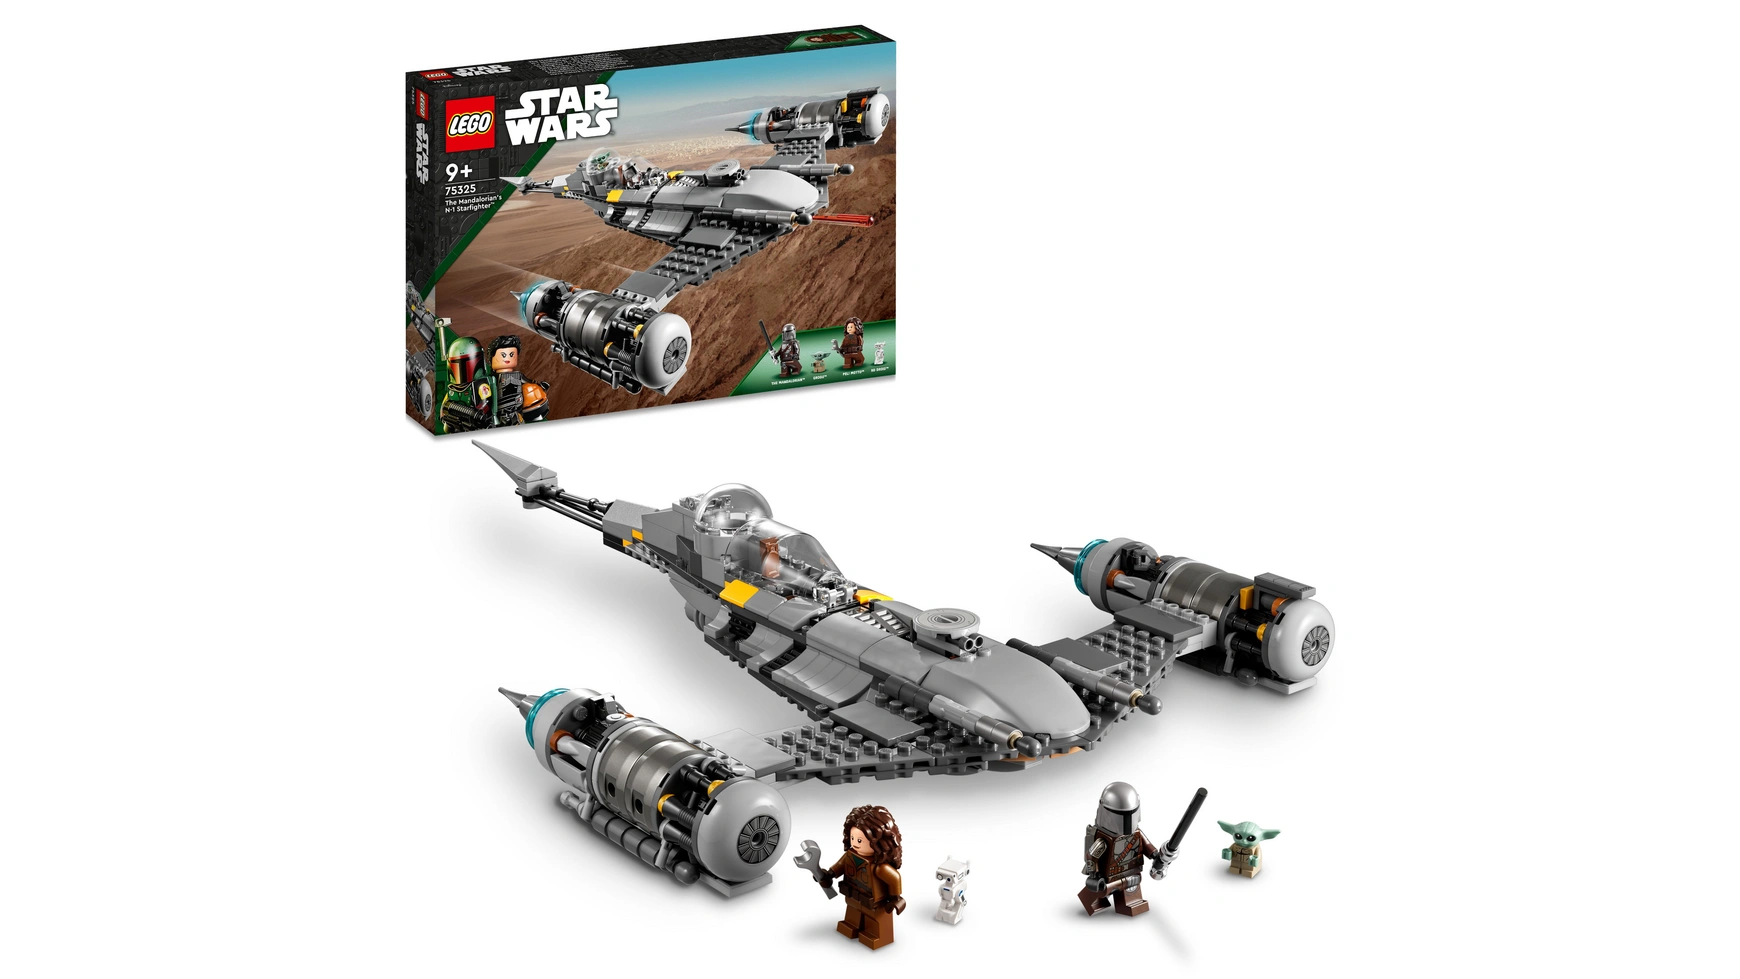 Lego Star Wars Набор Звездный истребитель Мандалорца Н-1 lego star wars 75039 звездный истребитель v wing 201 дет